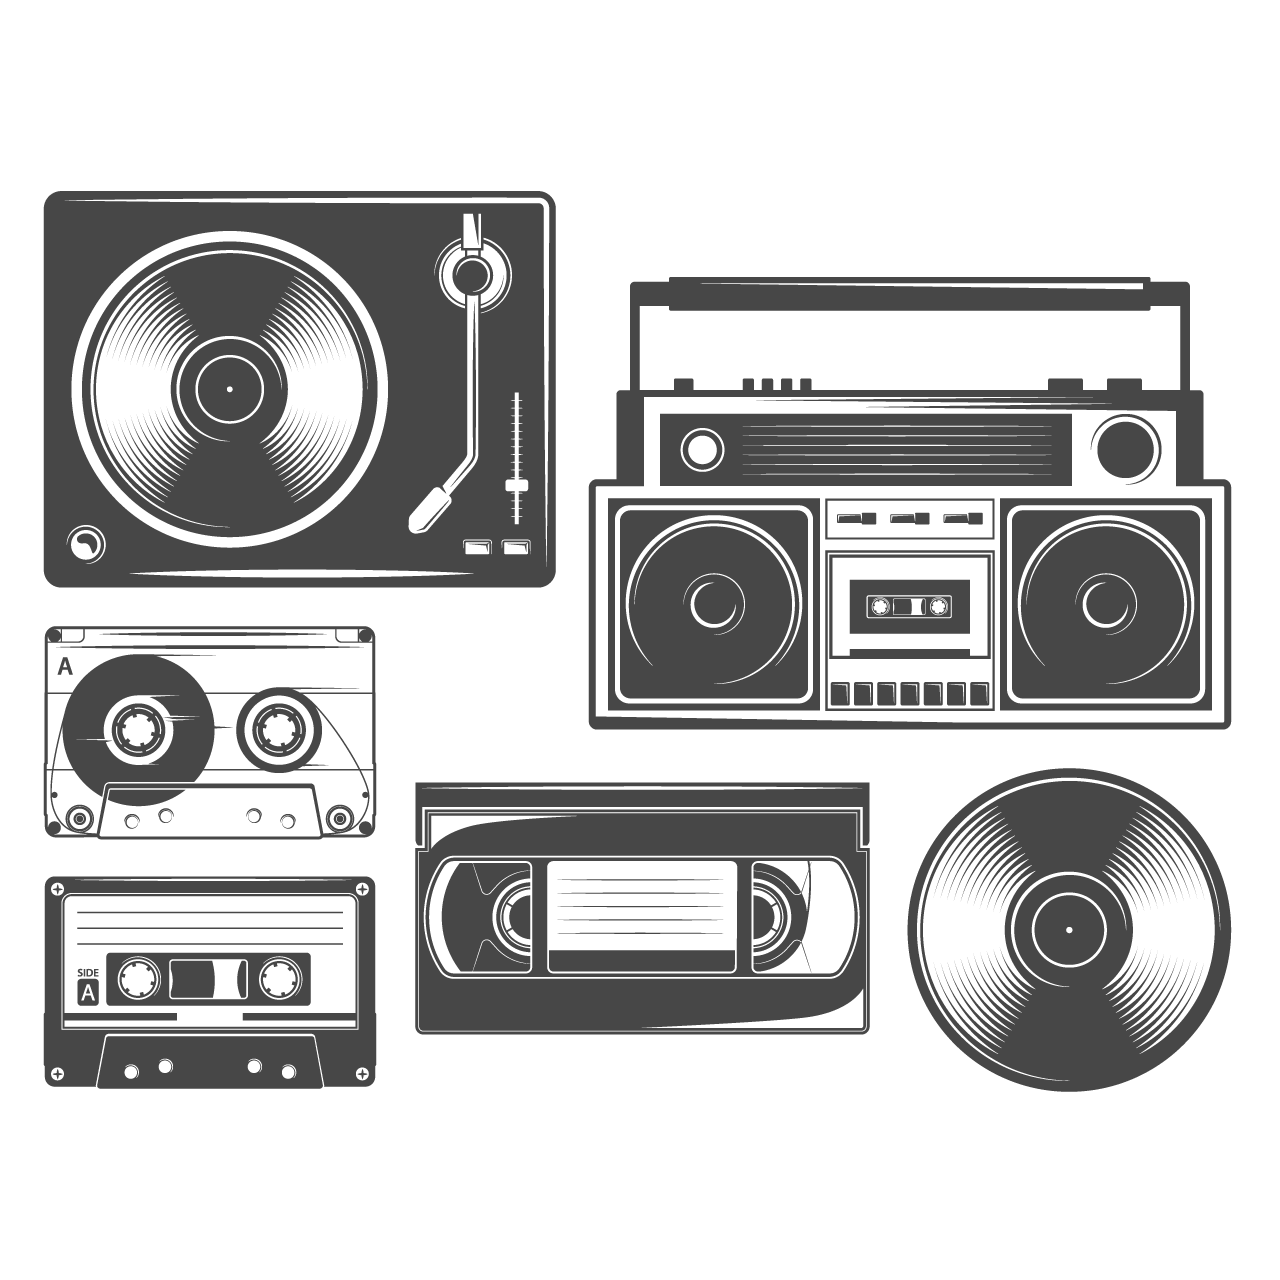 Set cassete vinyl recorders players icons cartoon illustration image